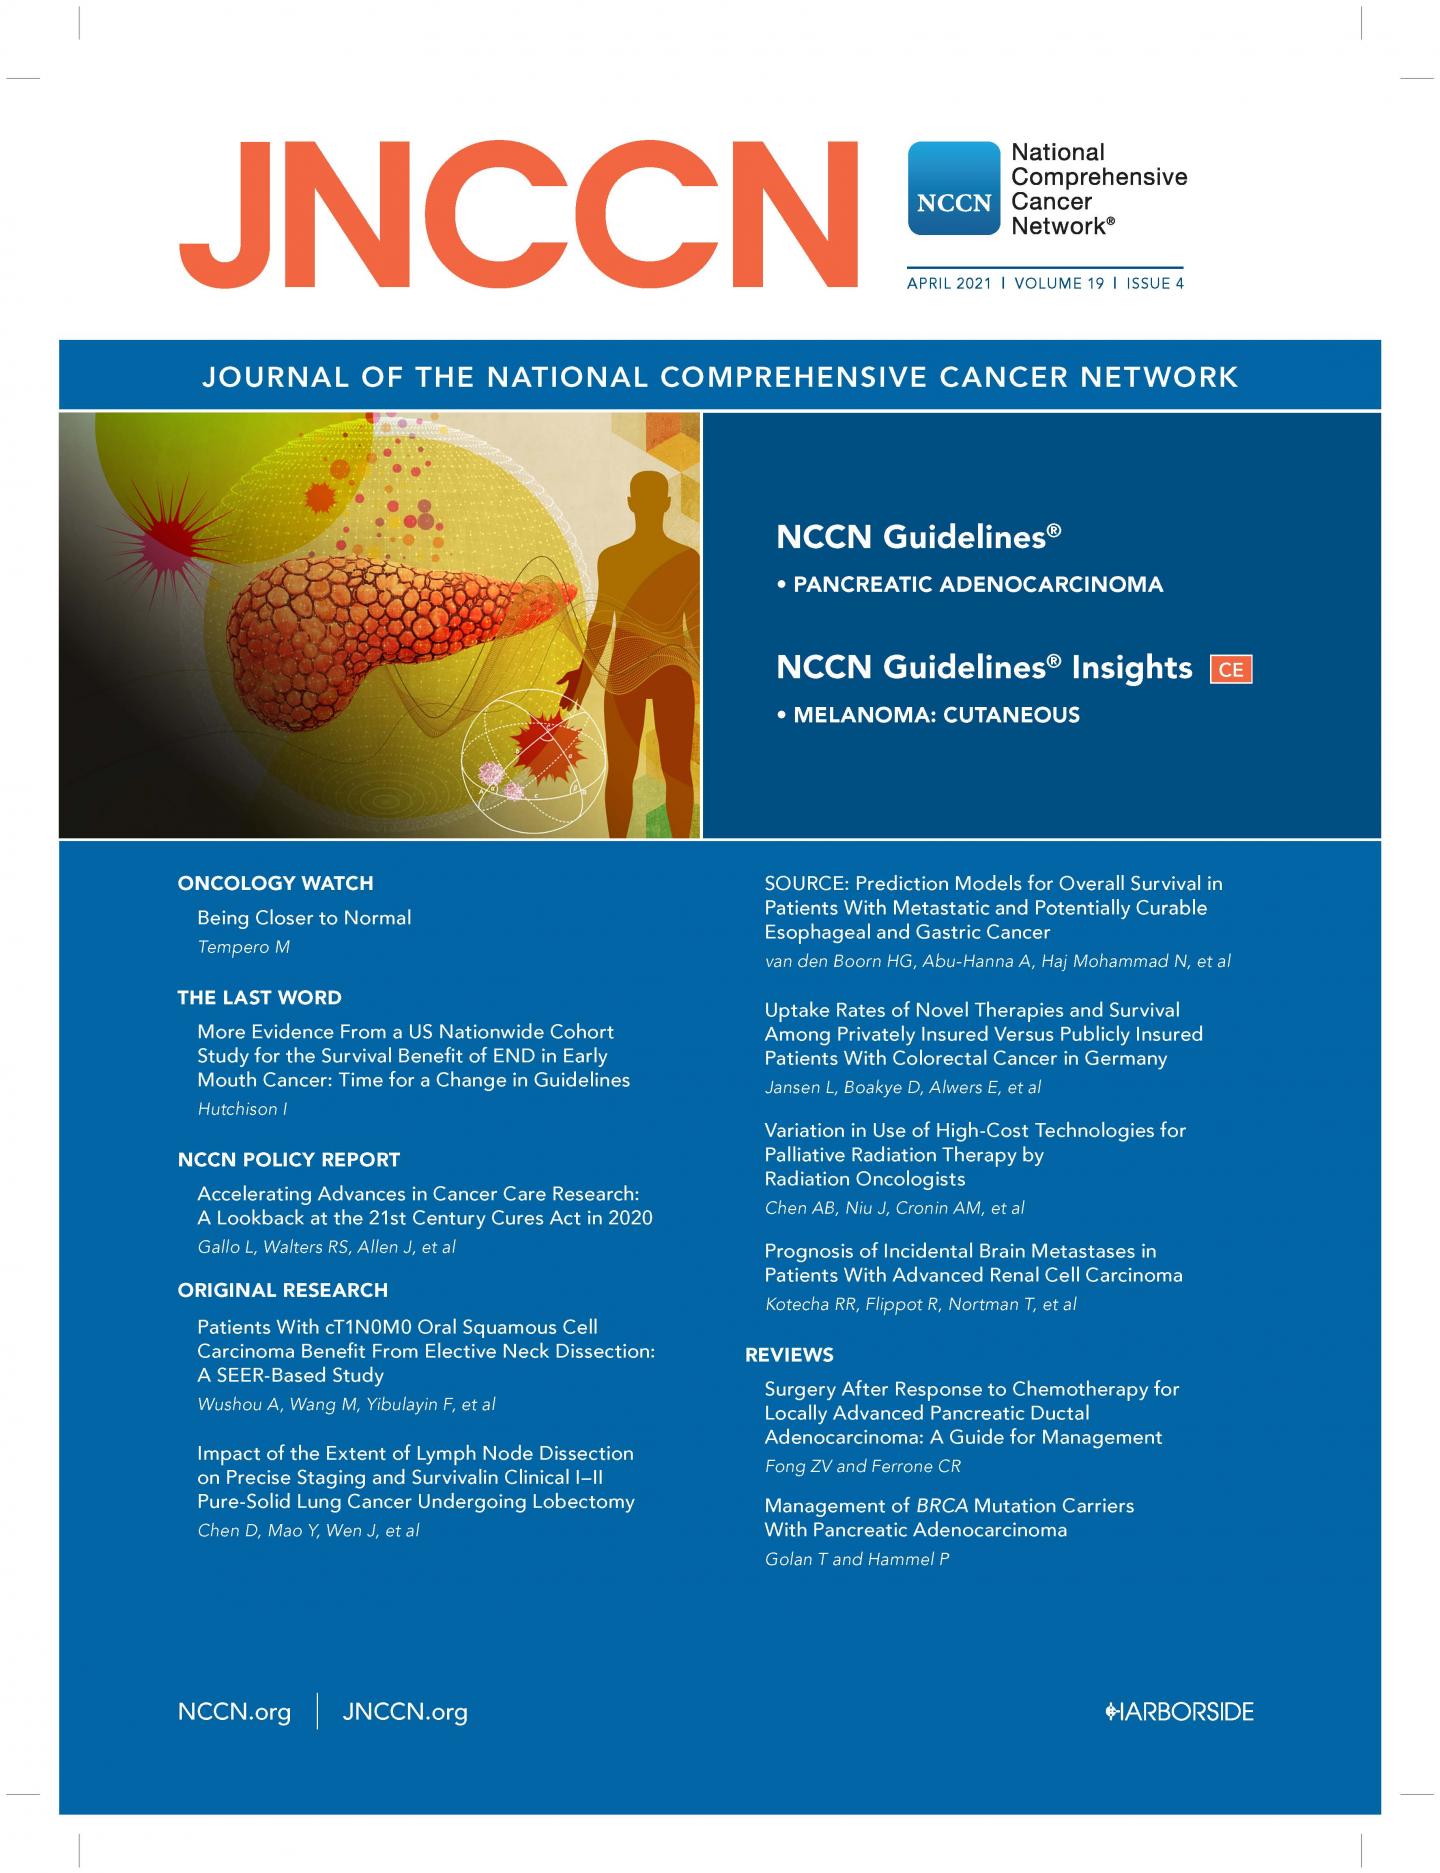 JNCCN April 2021 Cover